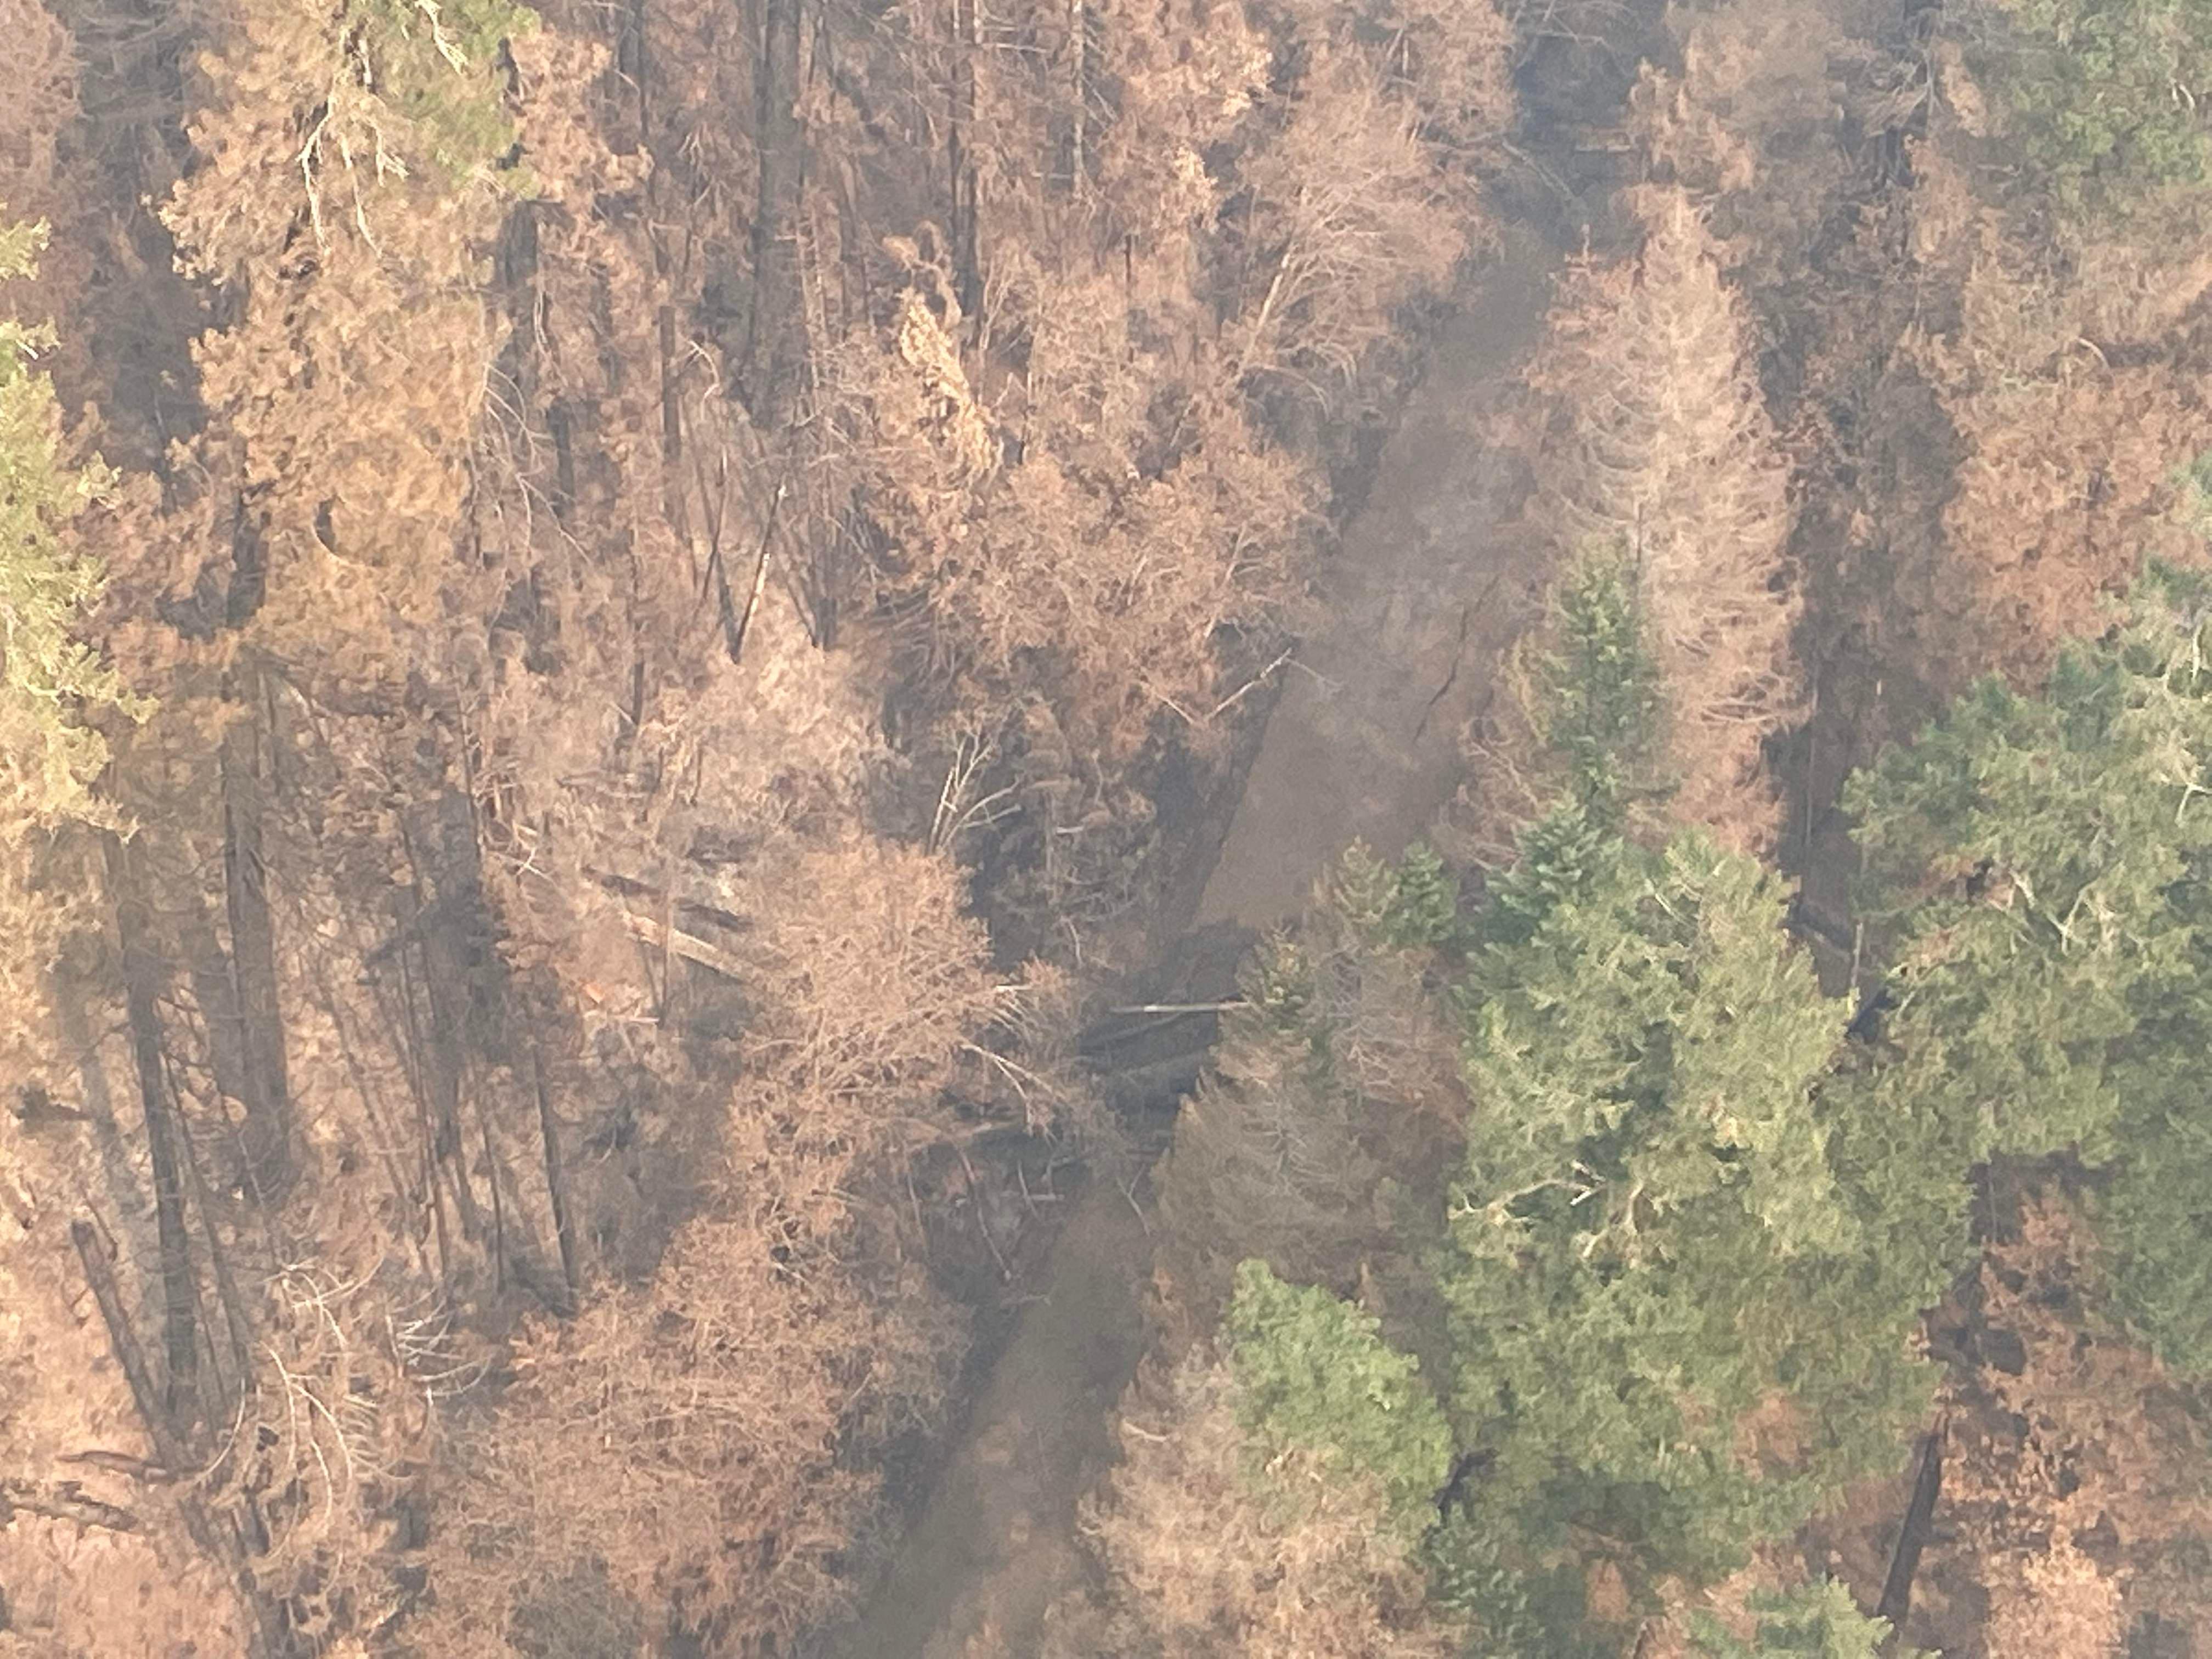 Fire damaged trees down across 24 Road in Salmon Creek area